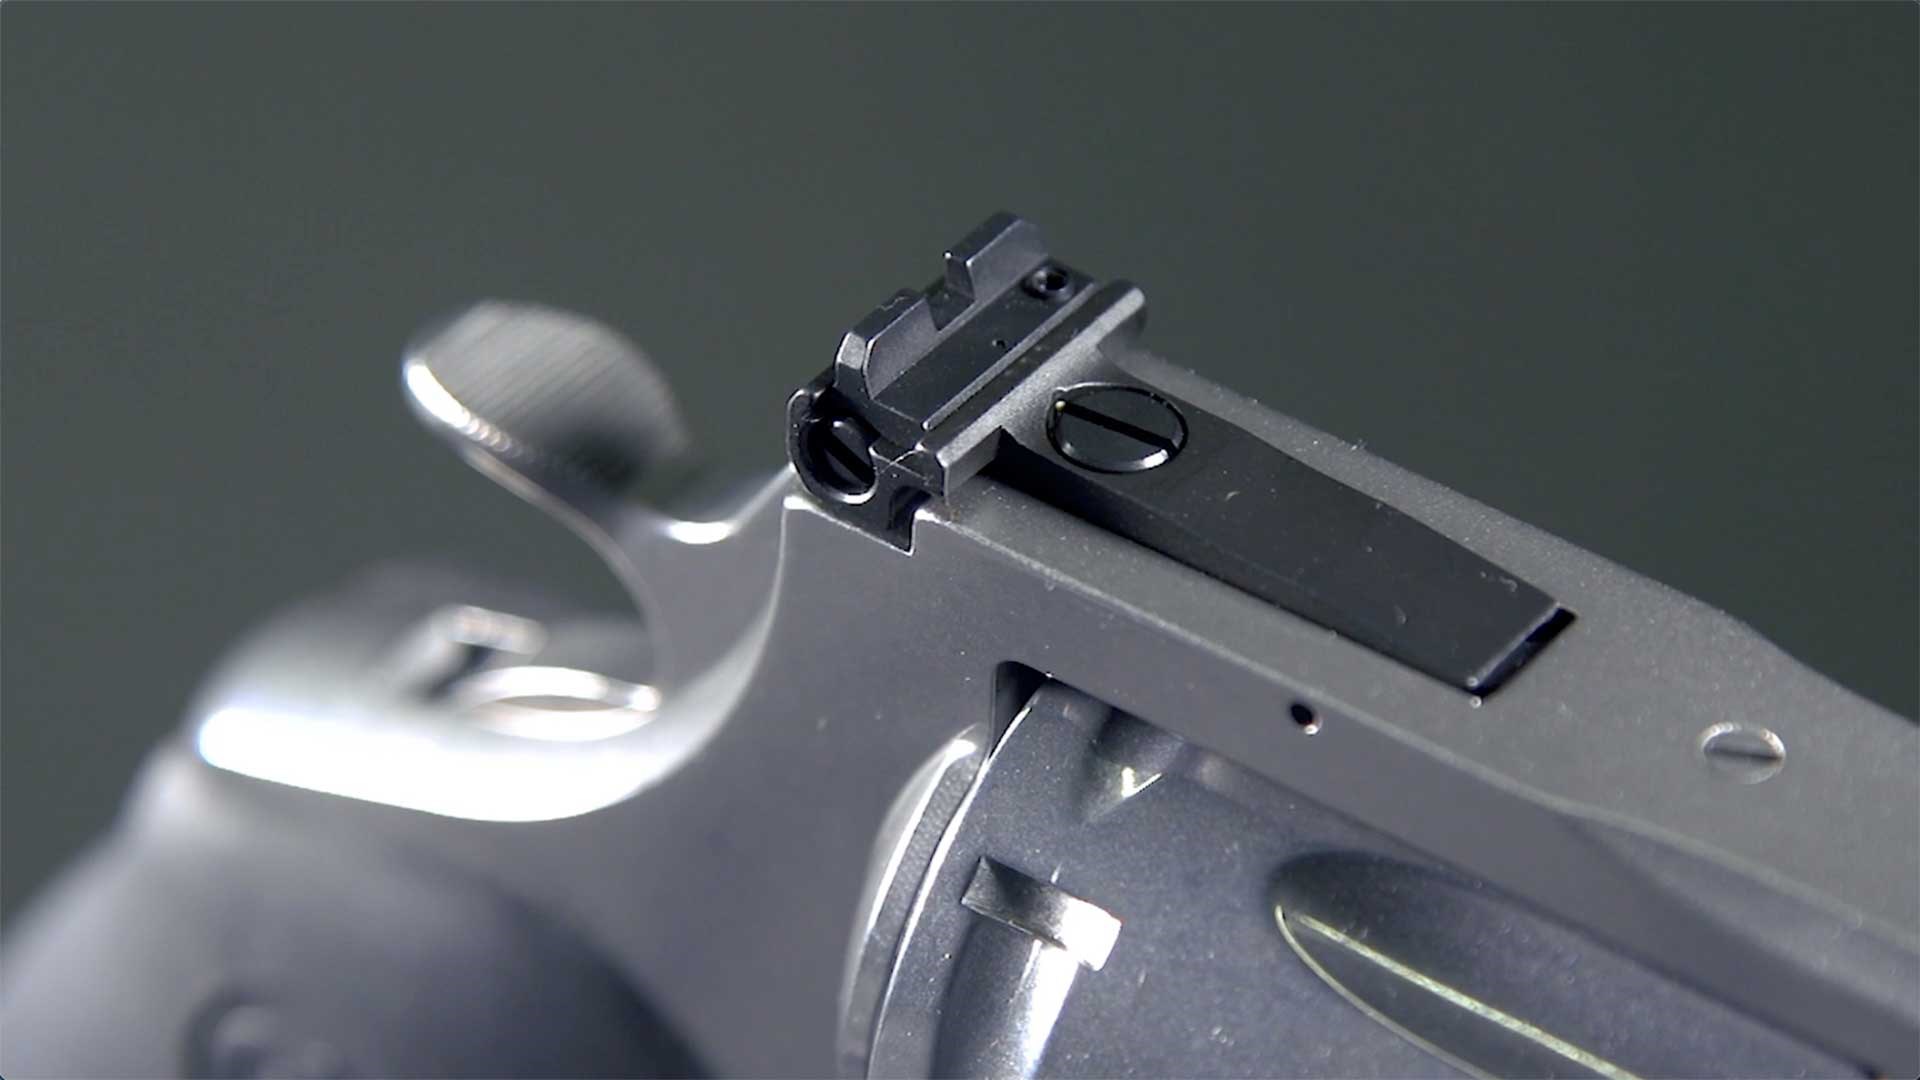 A close-up of the adjustable black rear sight on the Colt Anaconda revolver.